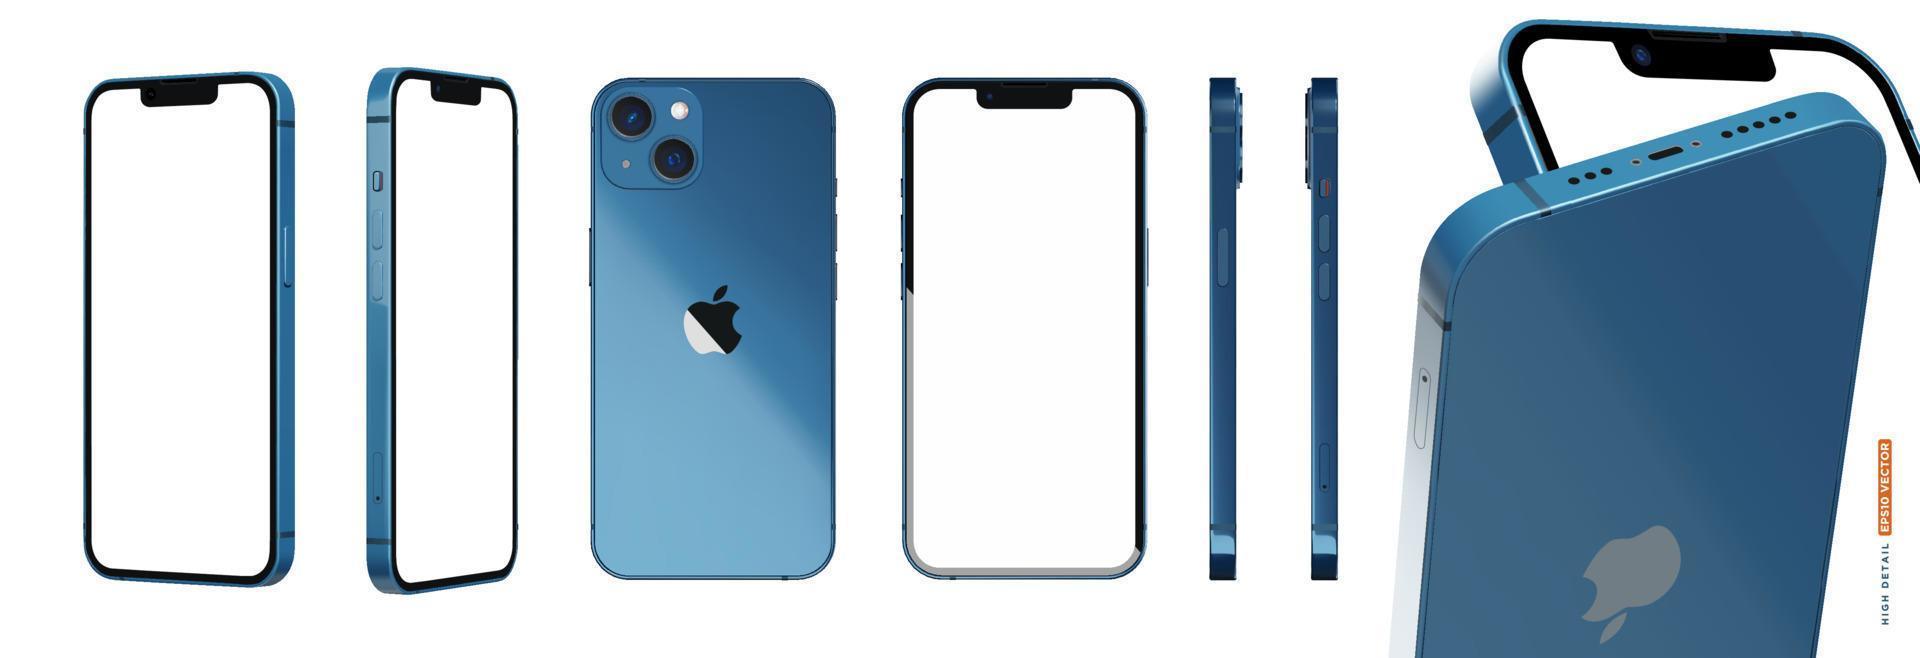 iphone 13 blaue farbe 3d realistischer vektormodellsatz vektor